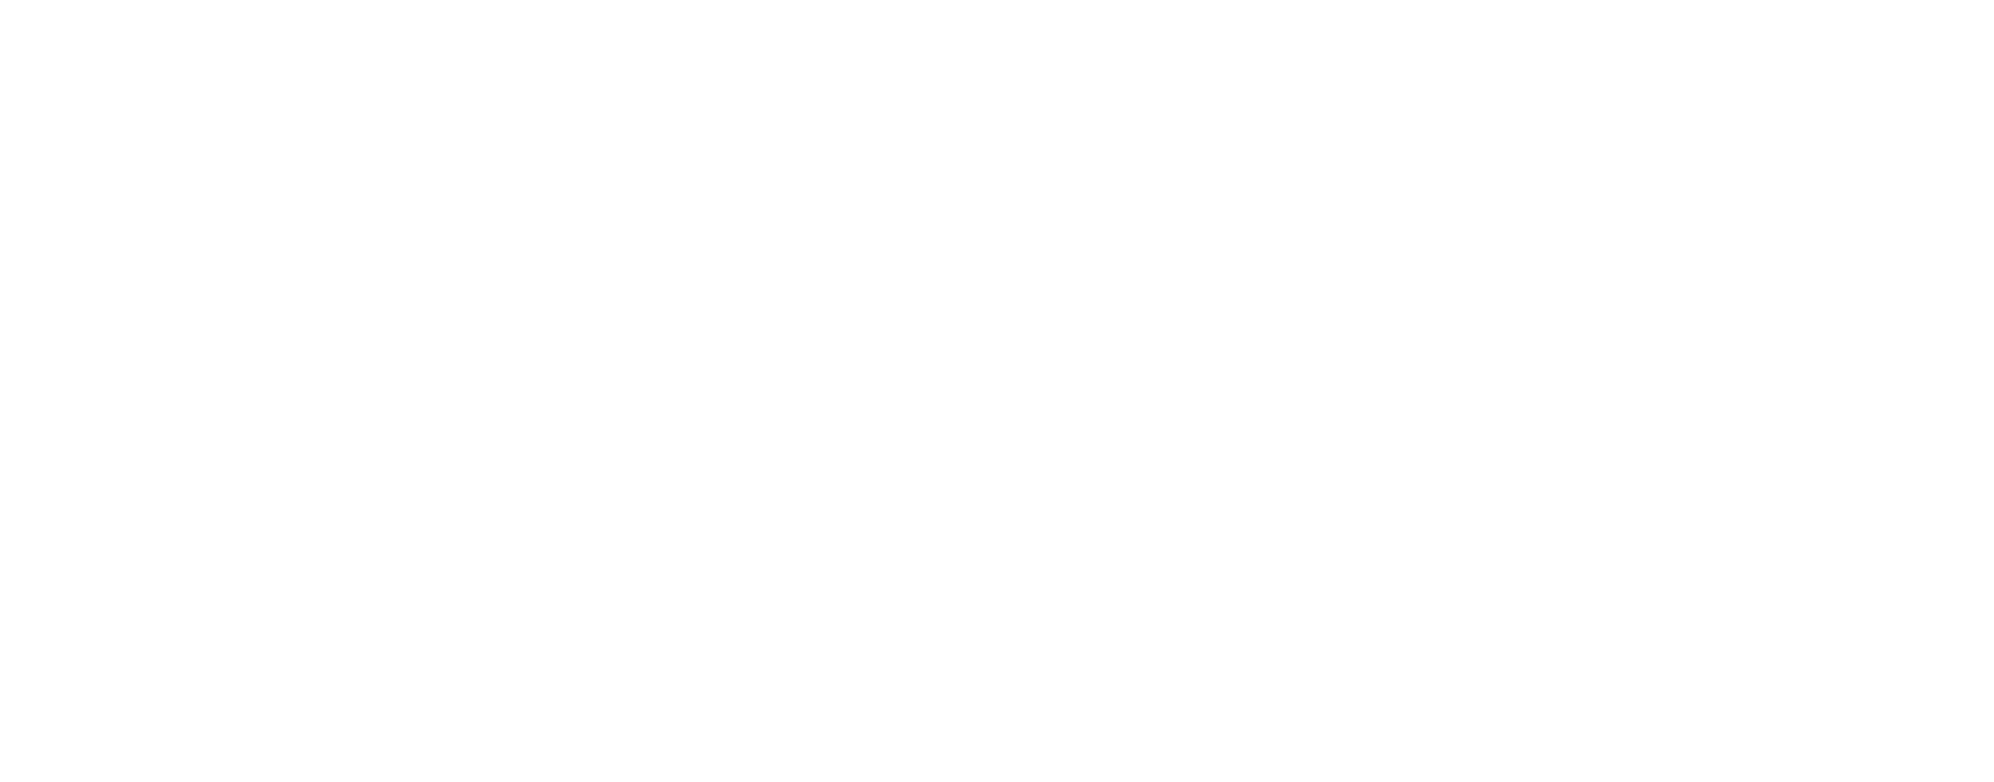 OpenFF Toolkit 0.11.4+3.g1dd42519.dirty documentation logo